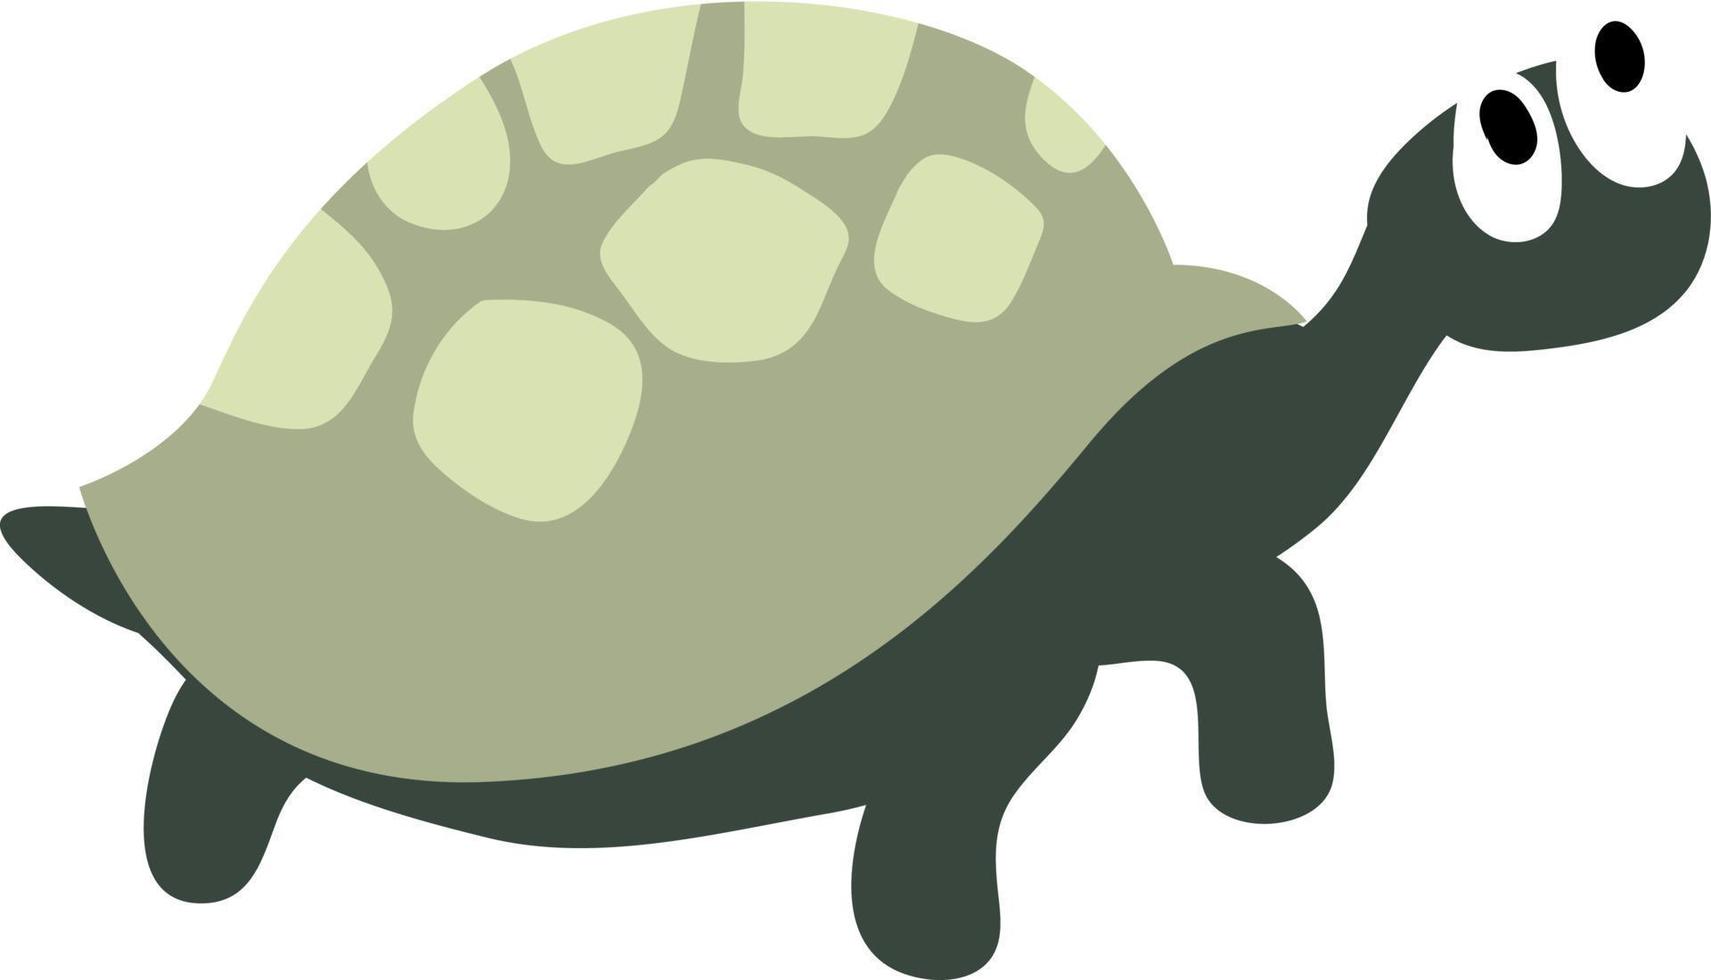 tartaruga, ilustração, vetor em fundo branco.